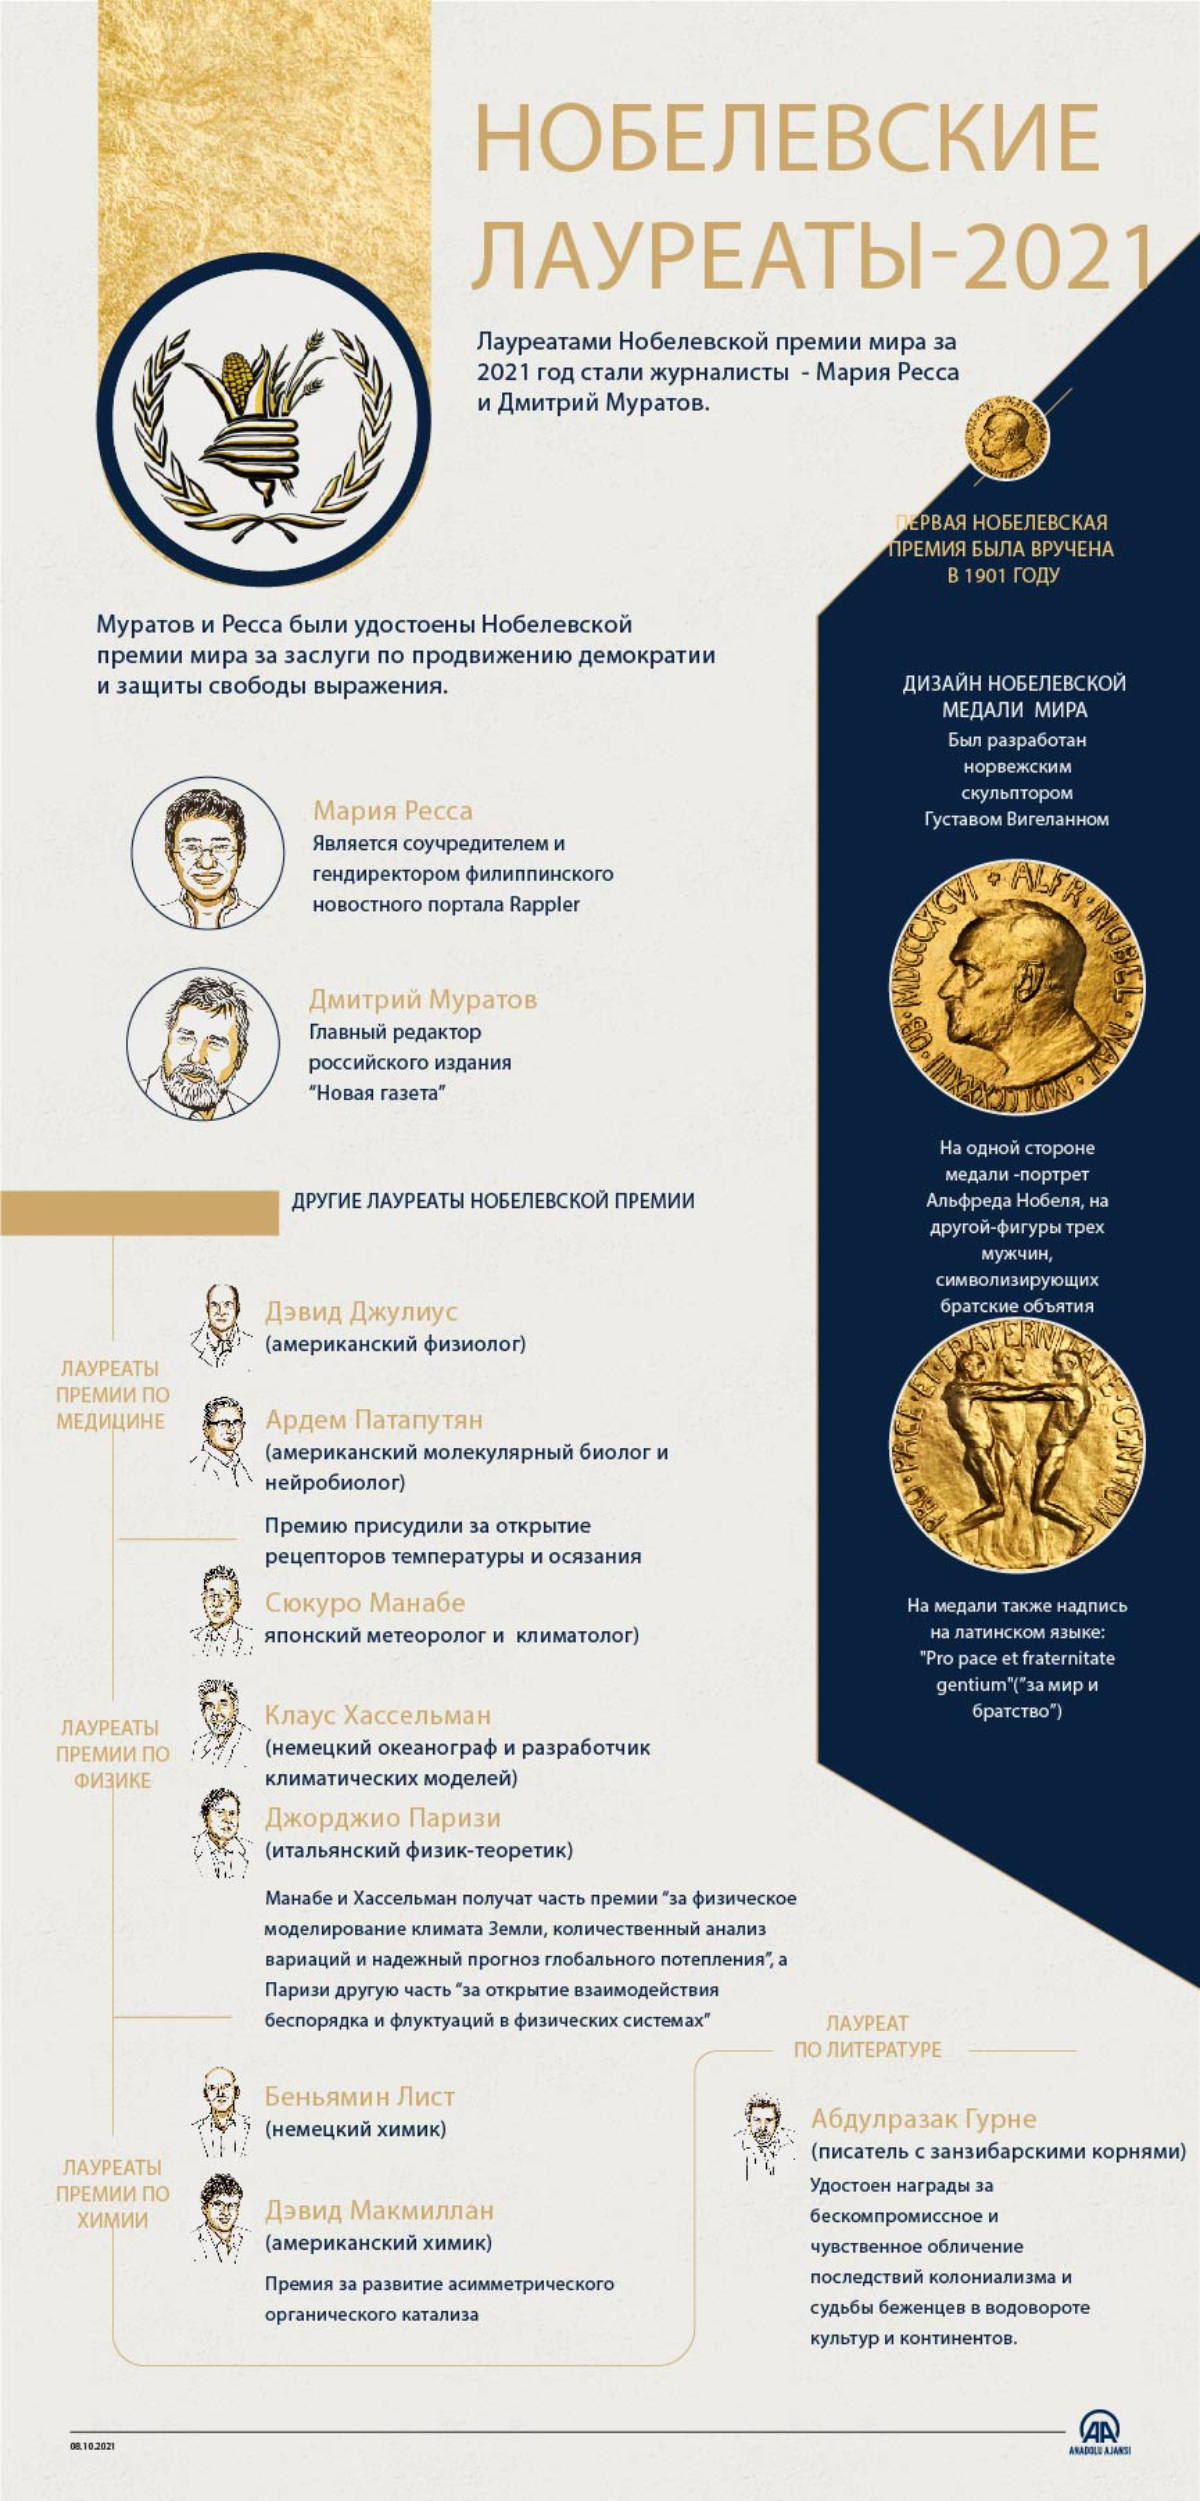 Нобелевские лауреаты - 2021